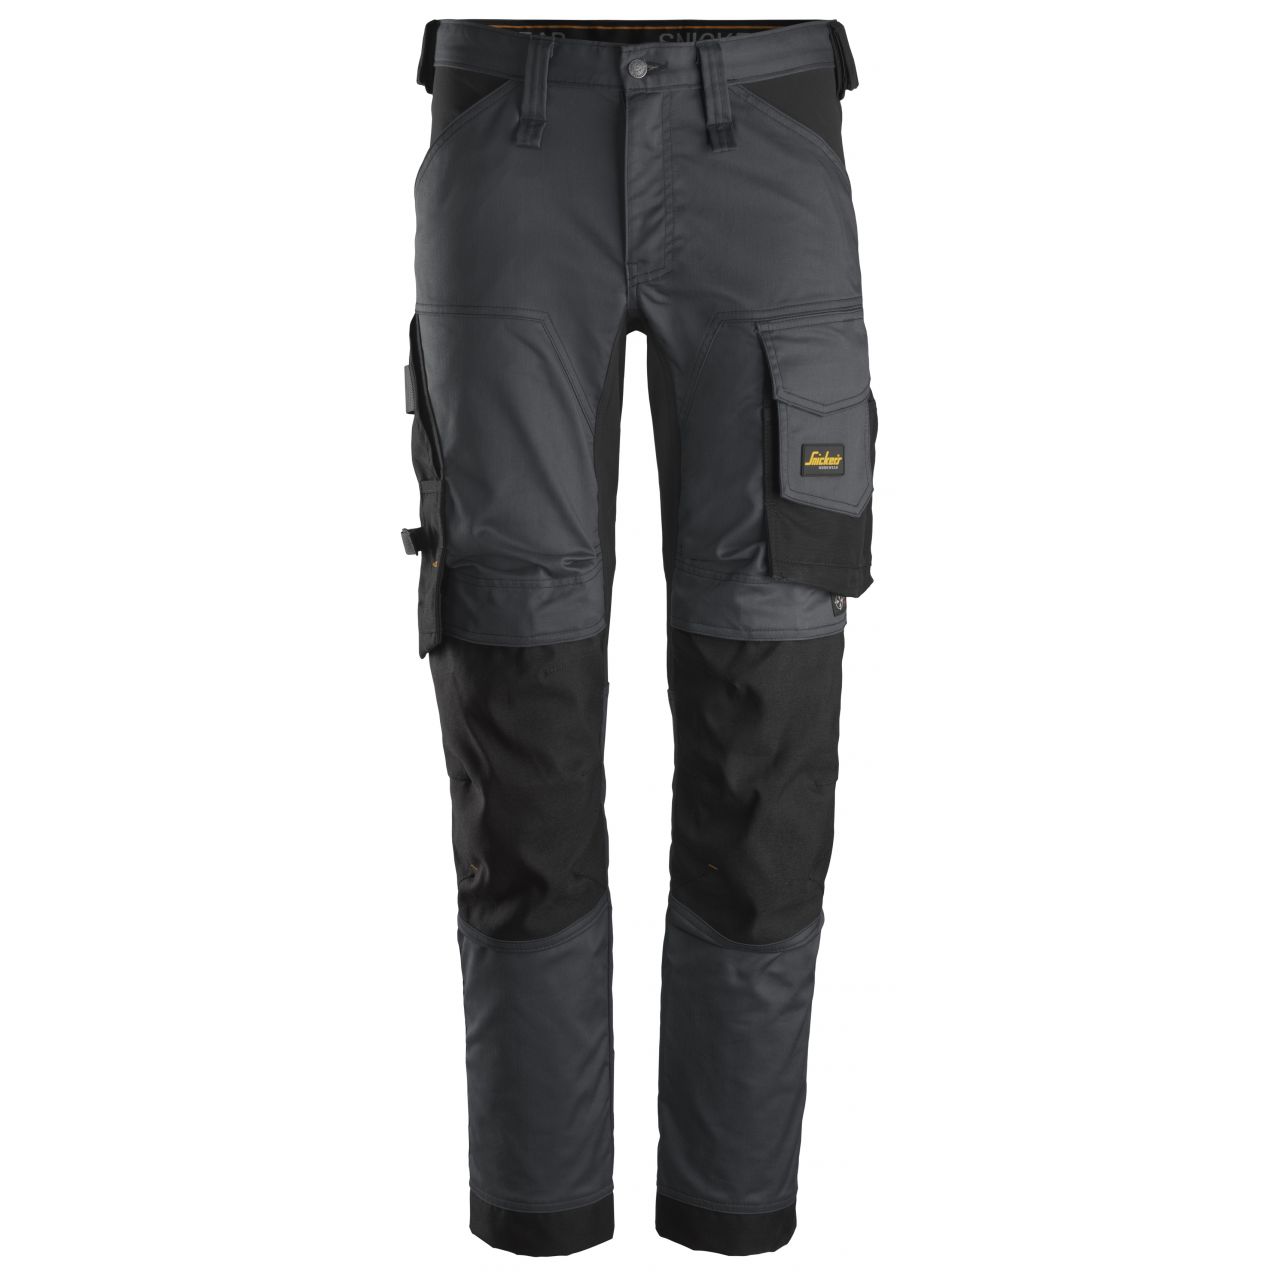 Pantalones elásticos AllroundWork Gris Acero-Negro talla 212